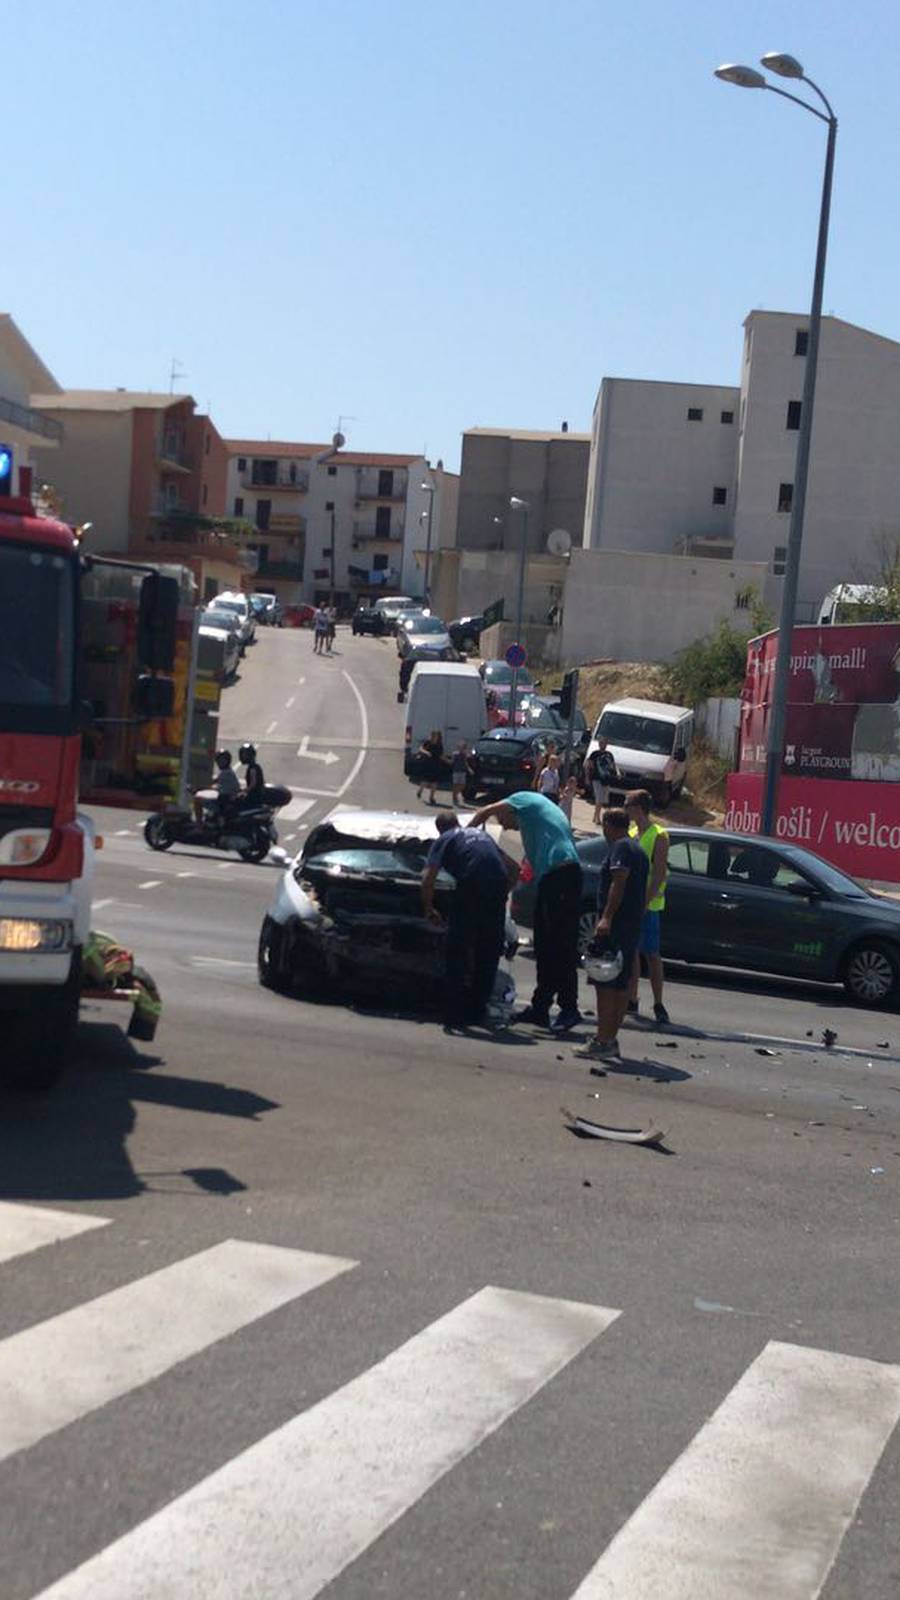 Strašne scene iz Splita: Vozača krvavog izvlačili iz automobila